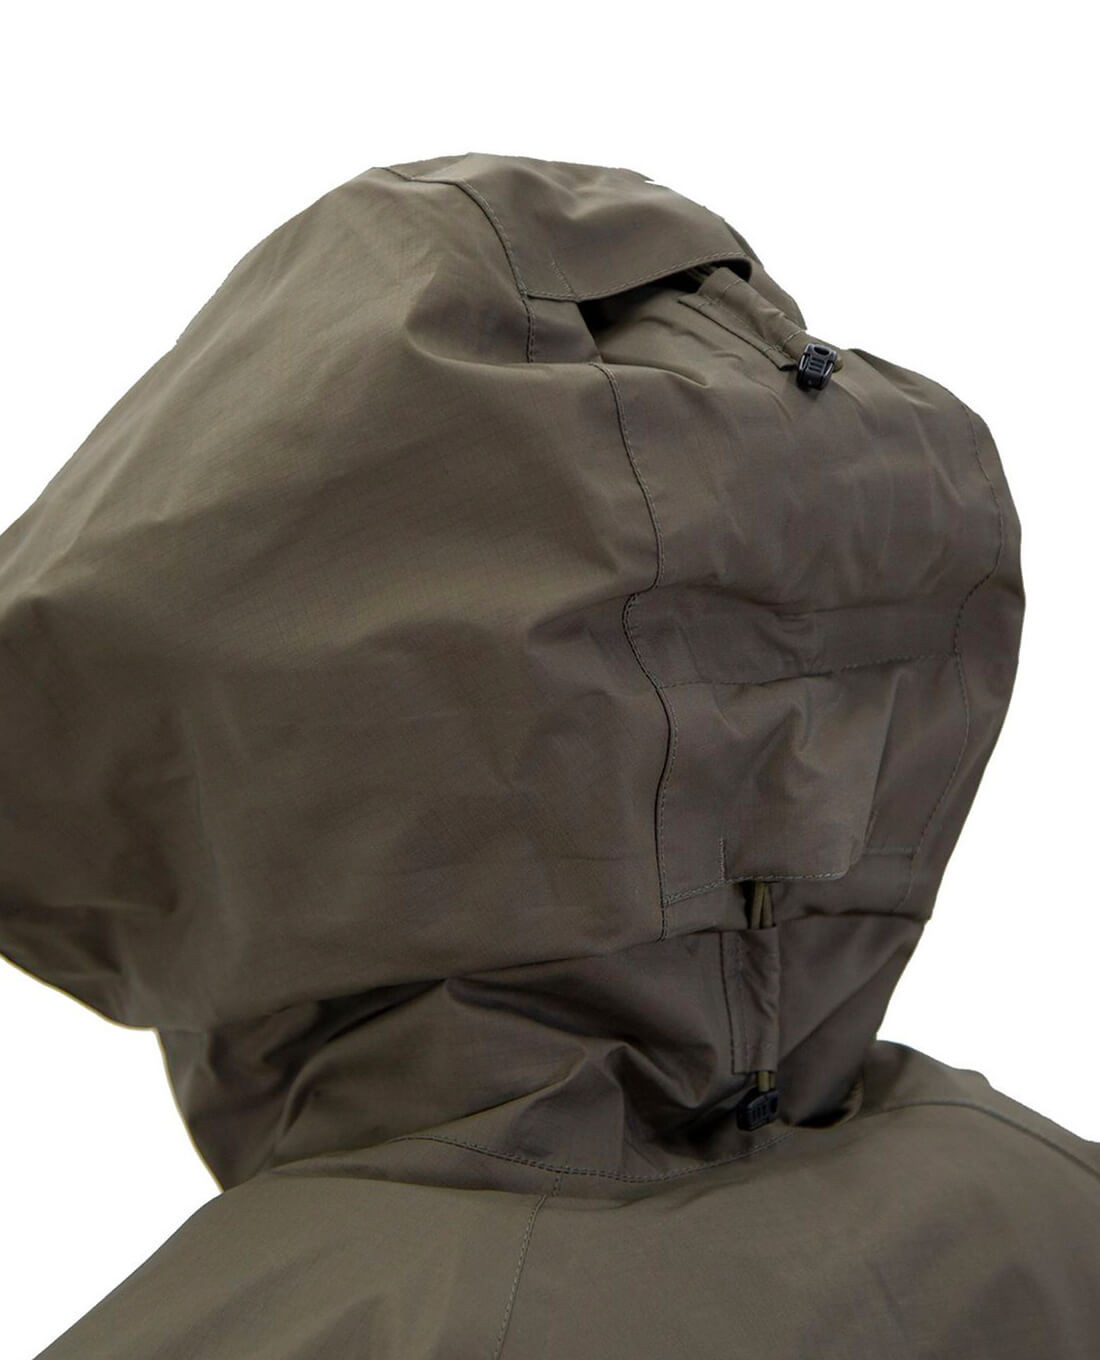 Carinthia PRG Jacket wasserdichte Ultra leichte atmungsaktive Gore-Tex Jacke Regenjacke